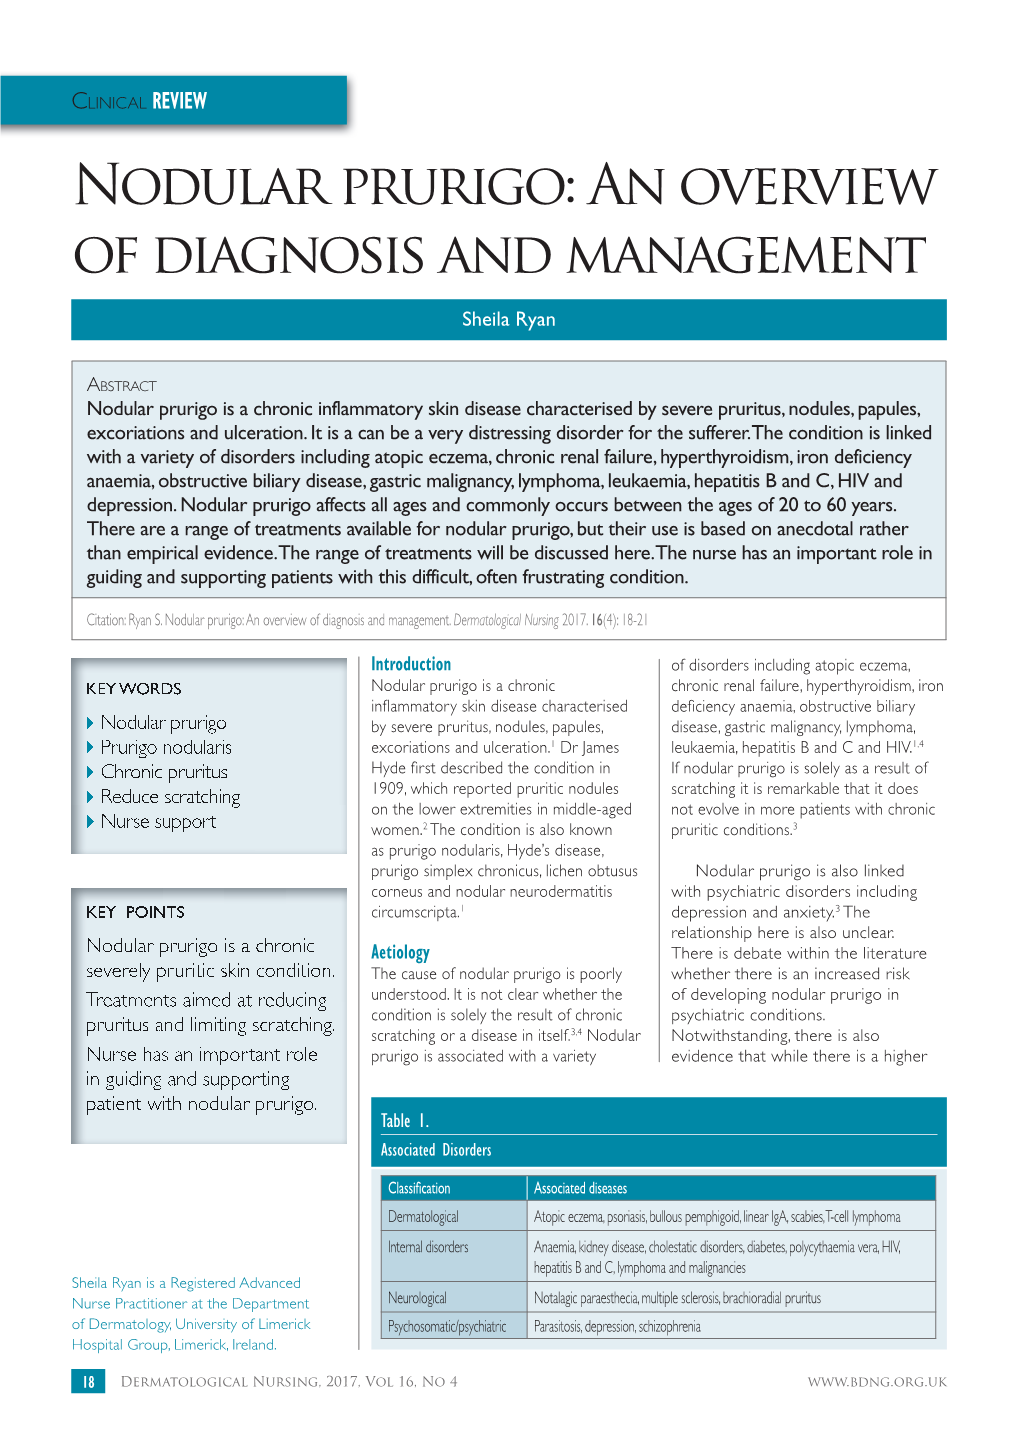 Nodular Prurigo: an Overview of Diagnosis and Management